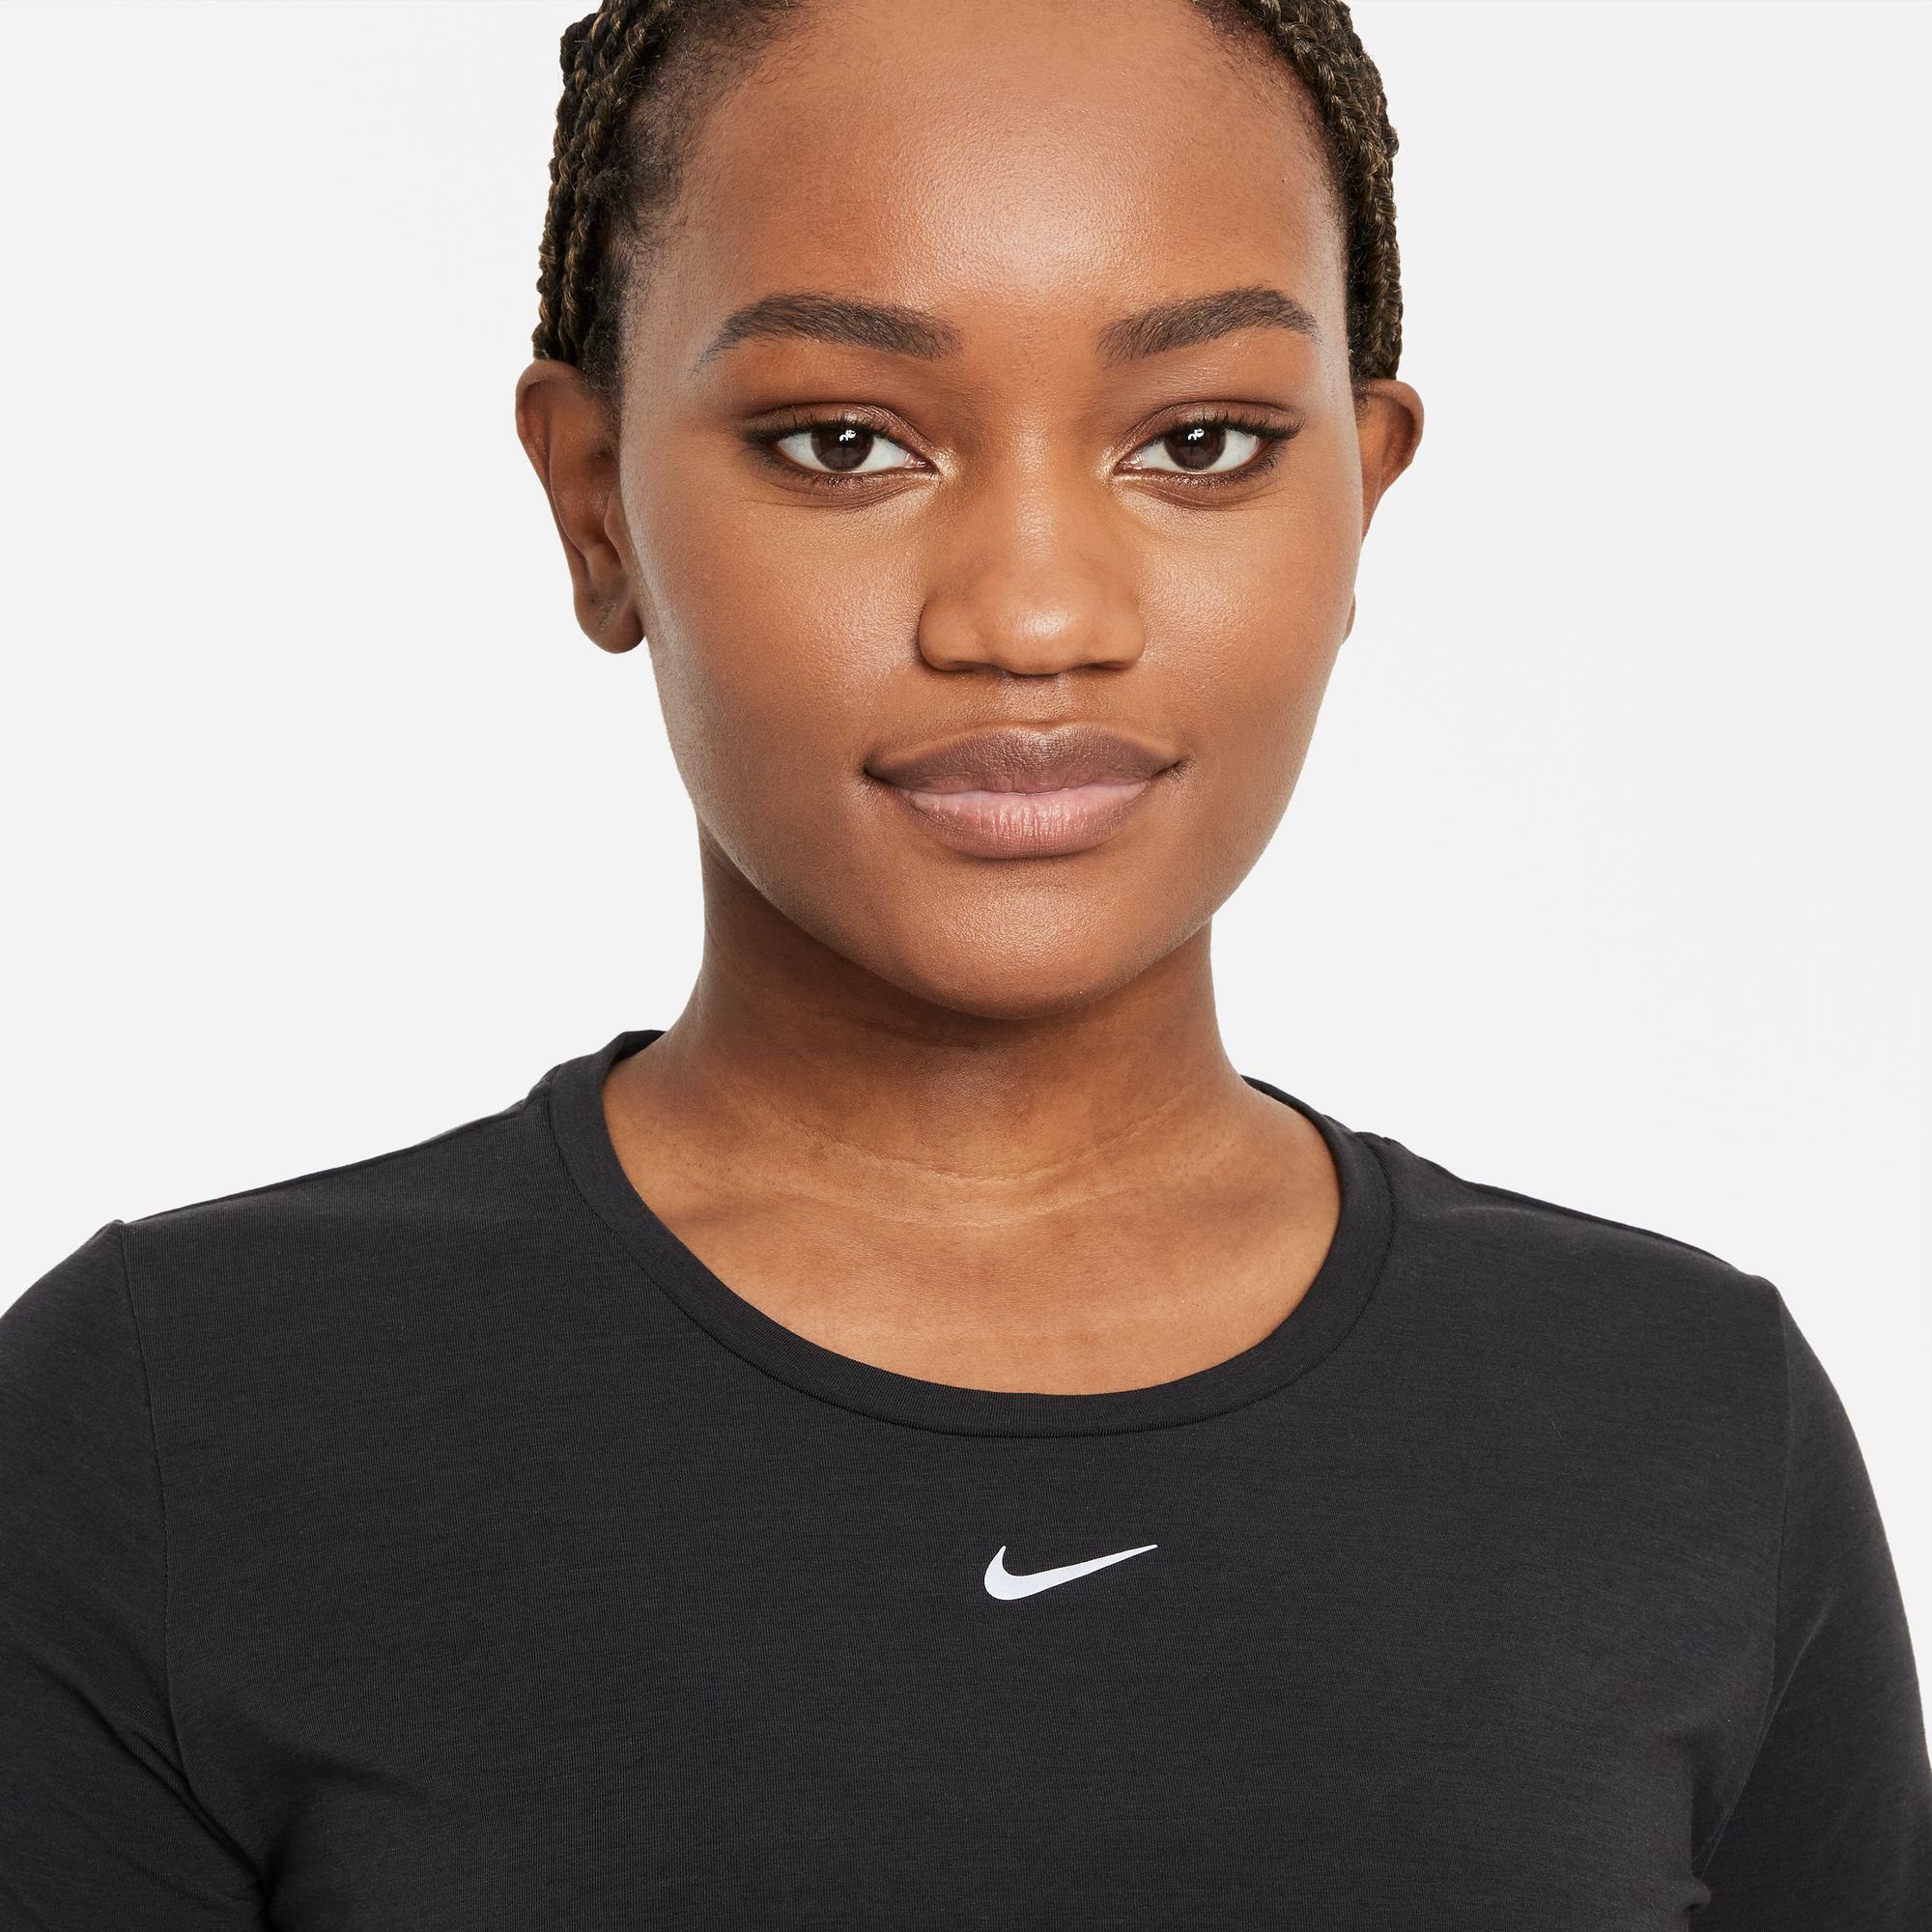 Nike Trainingsshirt DRI-FIT WOMEN'S FIT schwarz TOP LUXE SHORT-SLEEVE ONE UV STANDARD